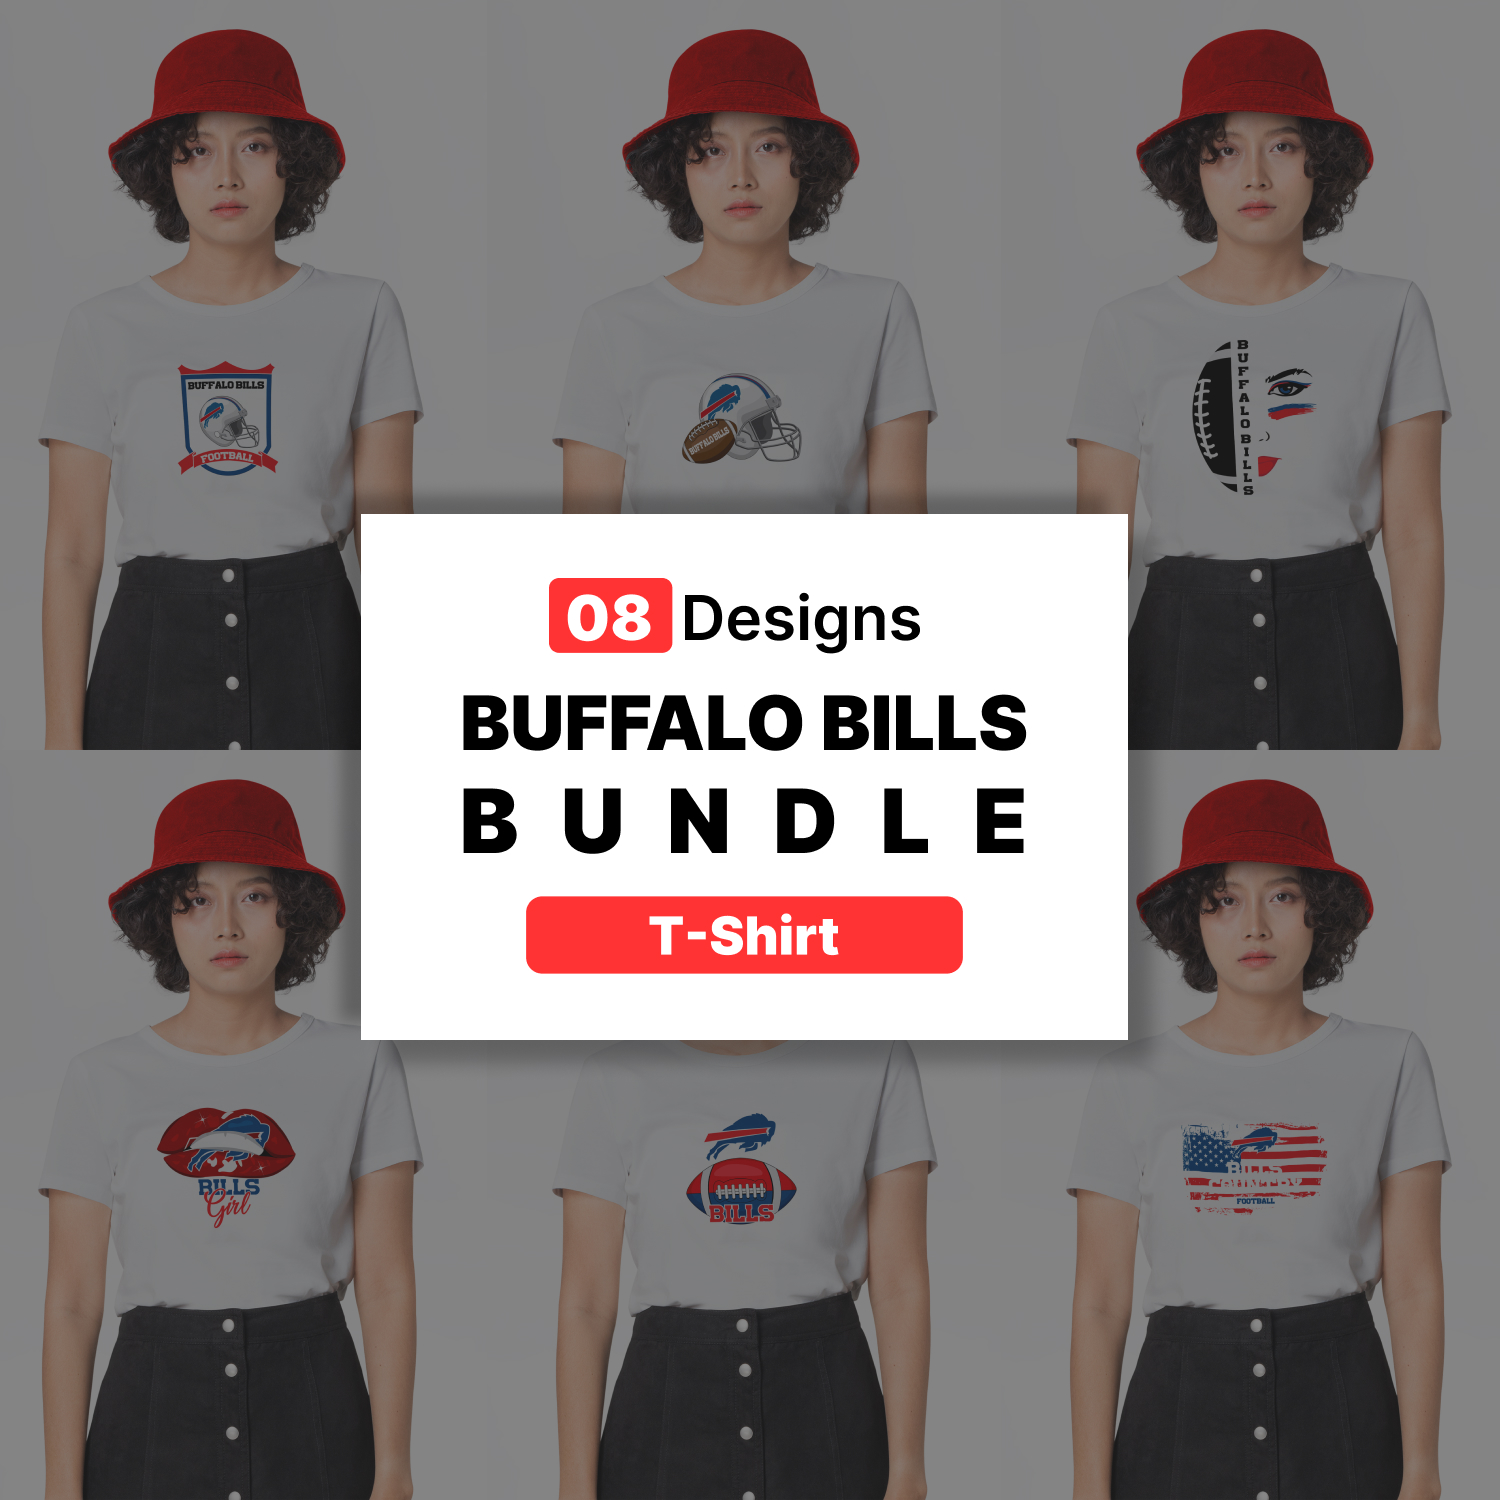 Buffalo Bills SVG T-Shirt Designs